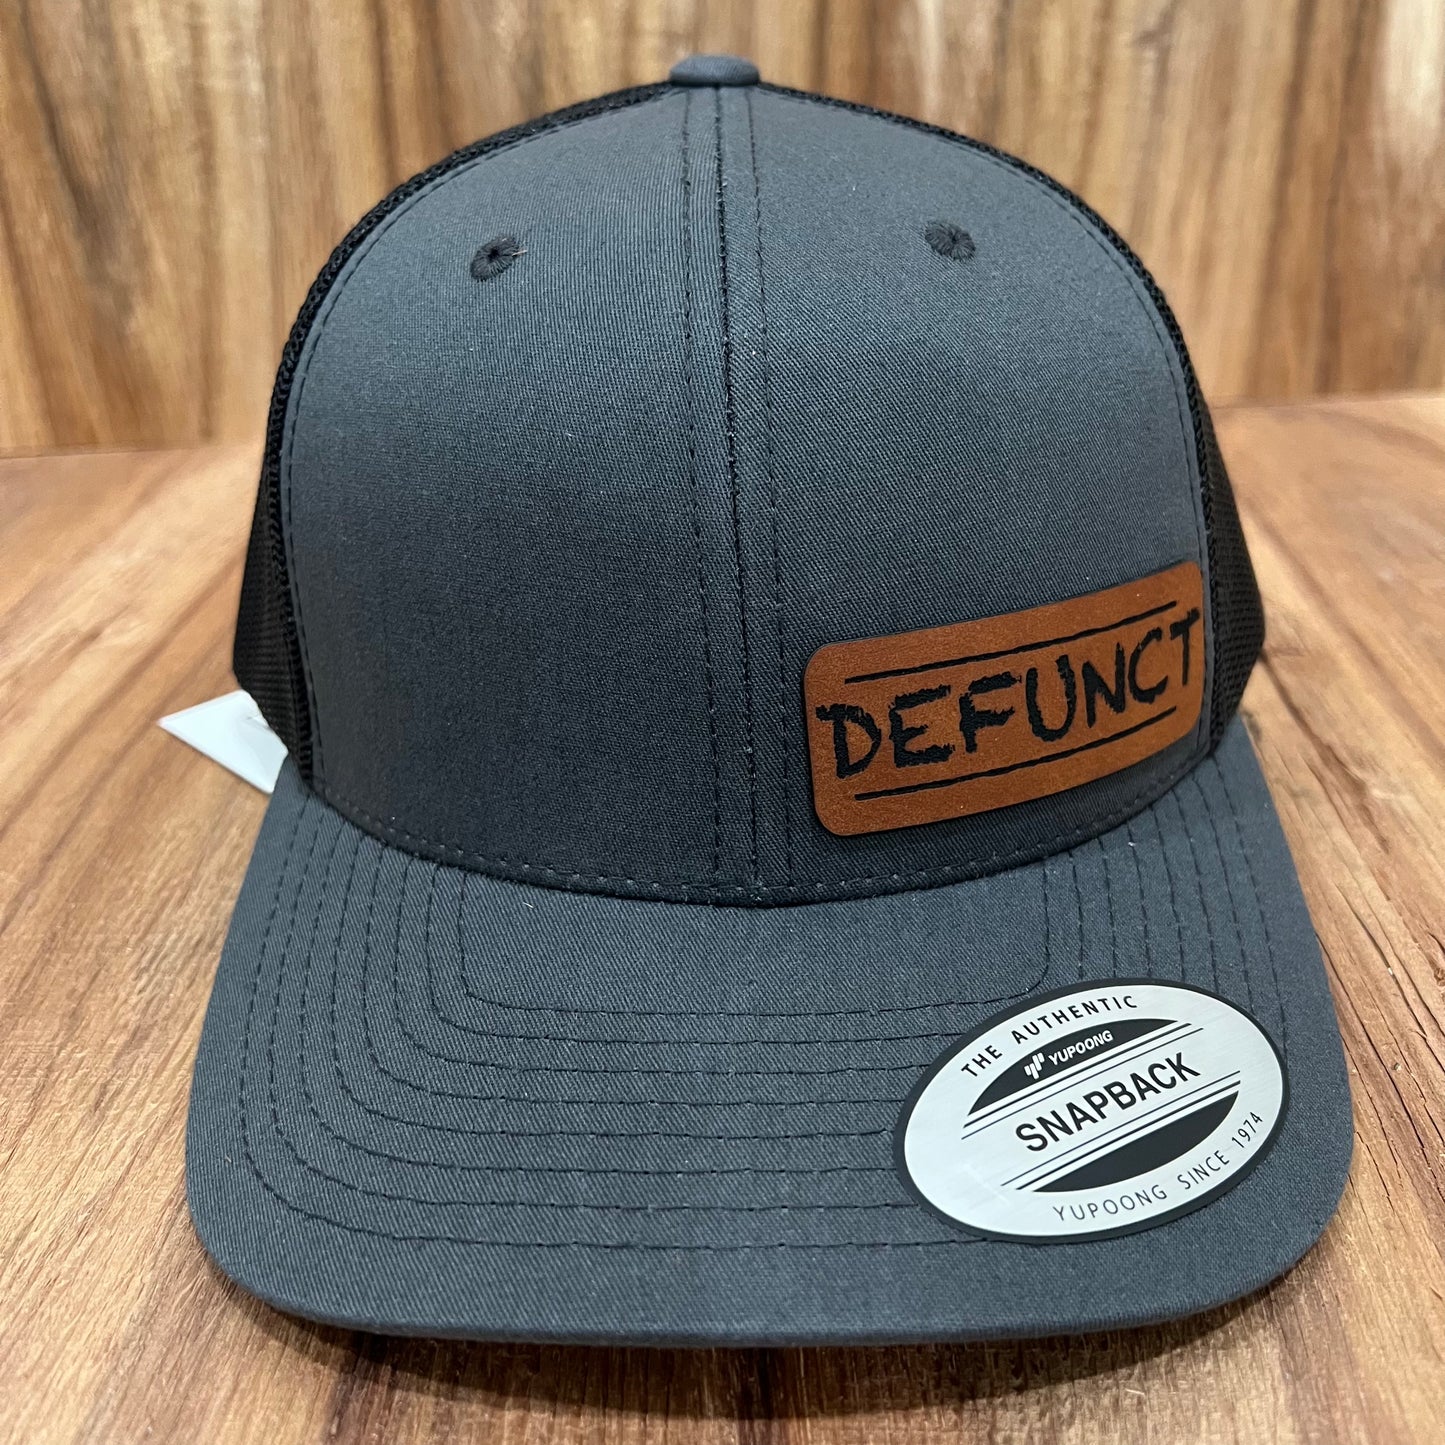 DEFUNCT - Yupoong 6606 SnapBack Trucker Hat